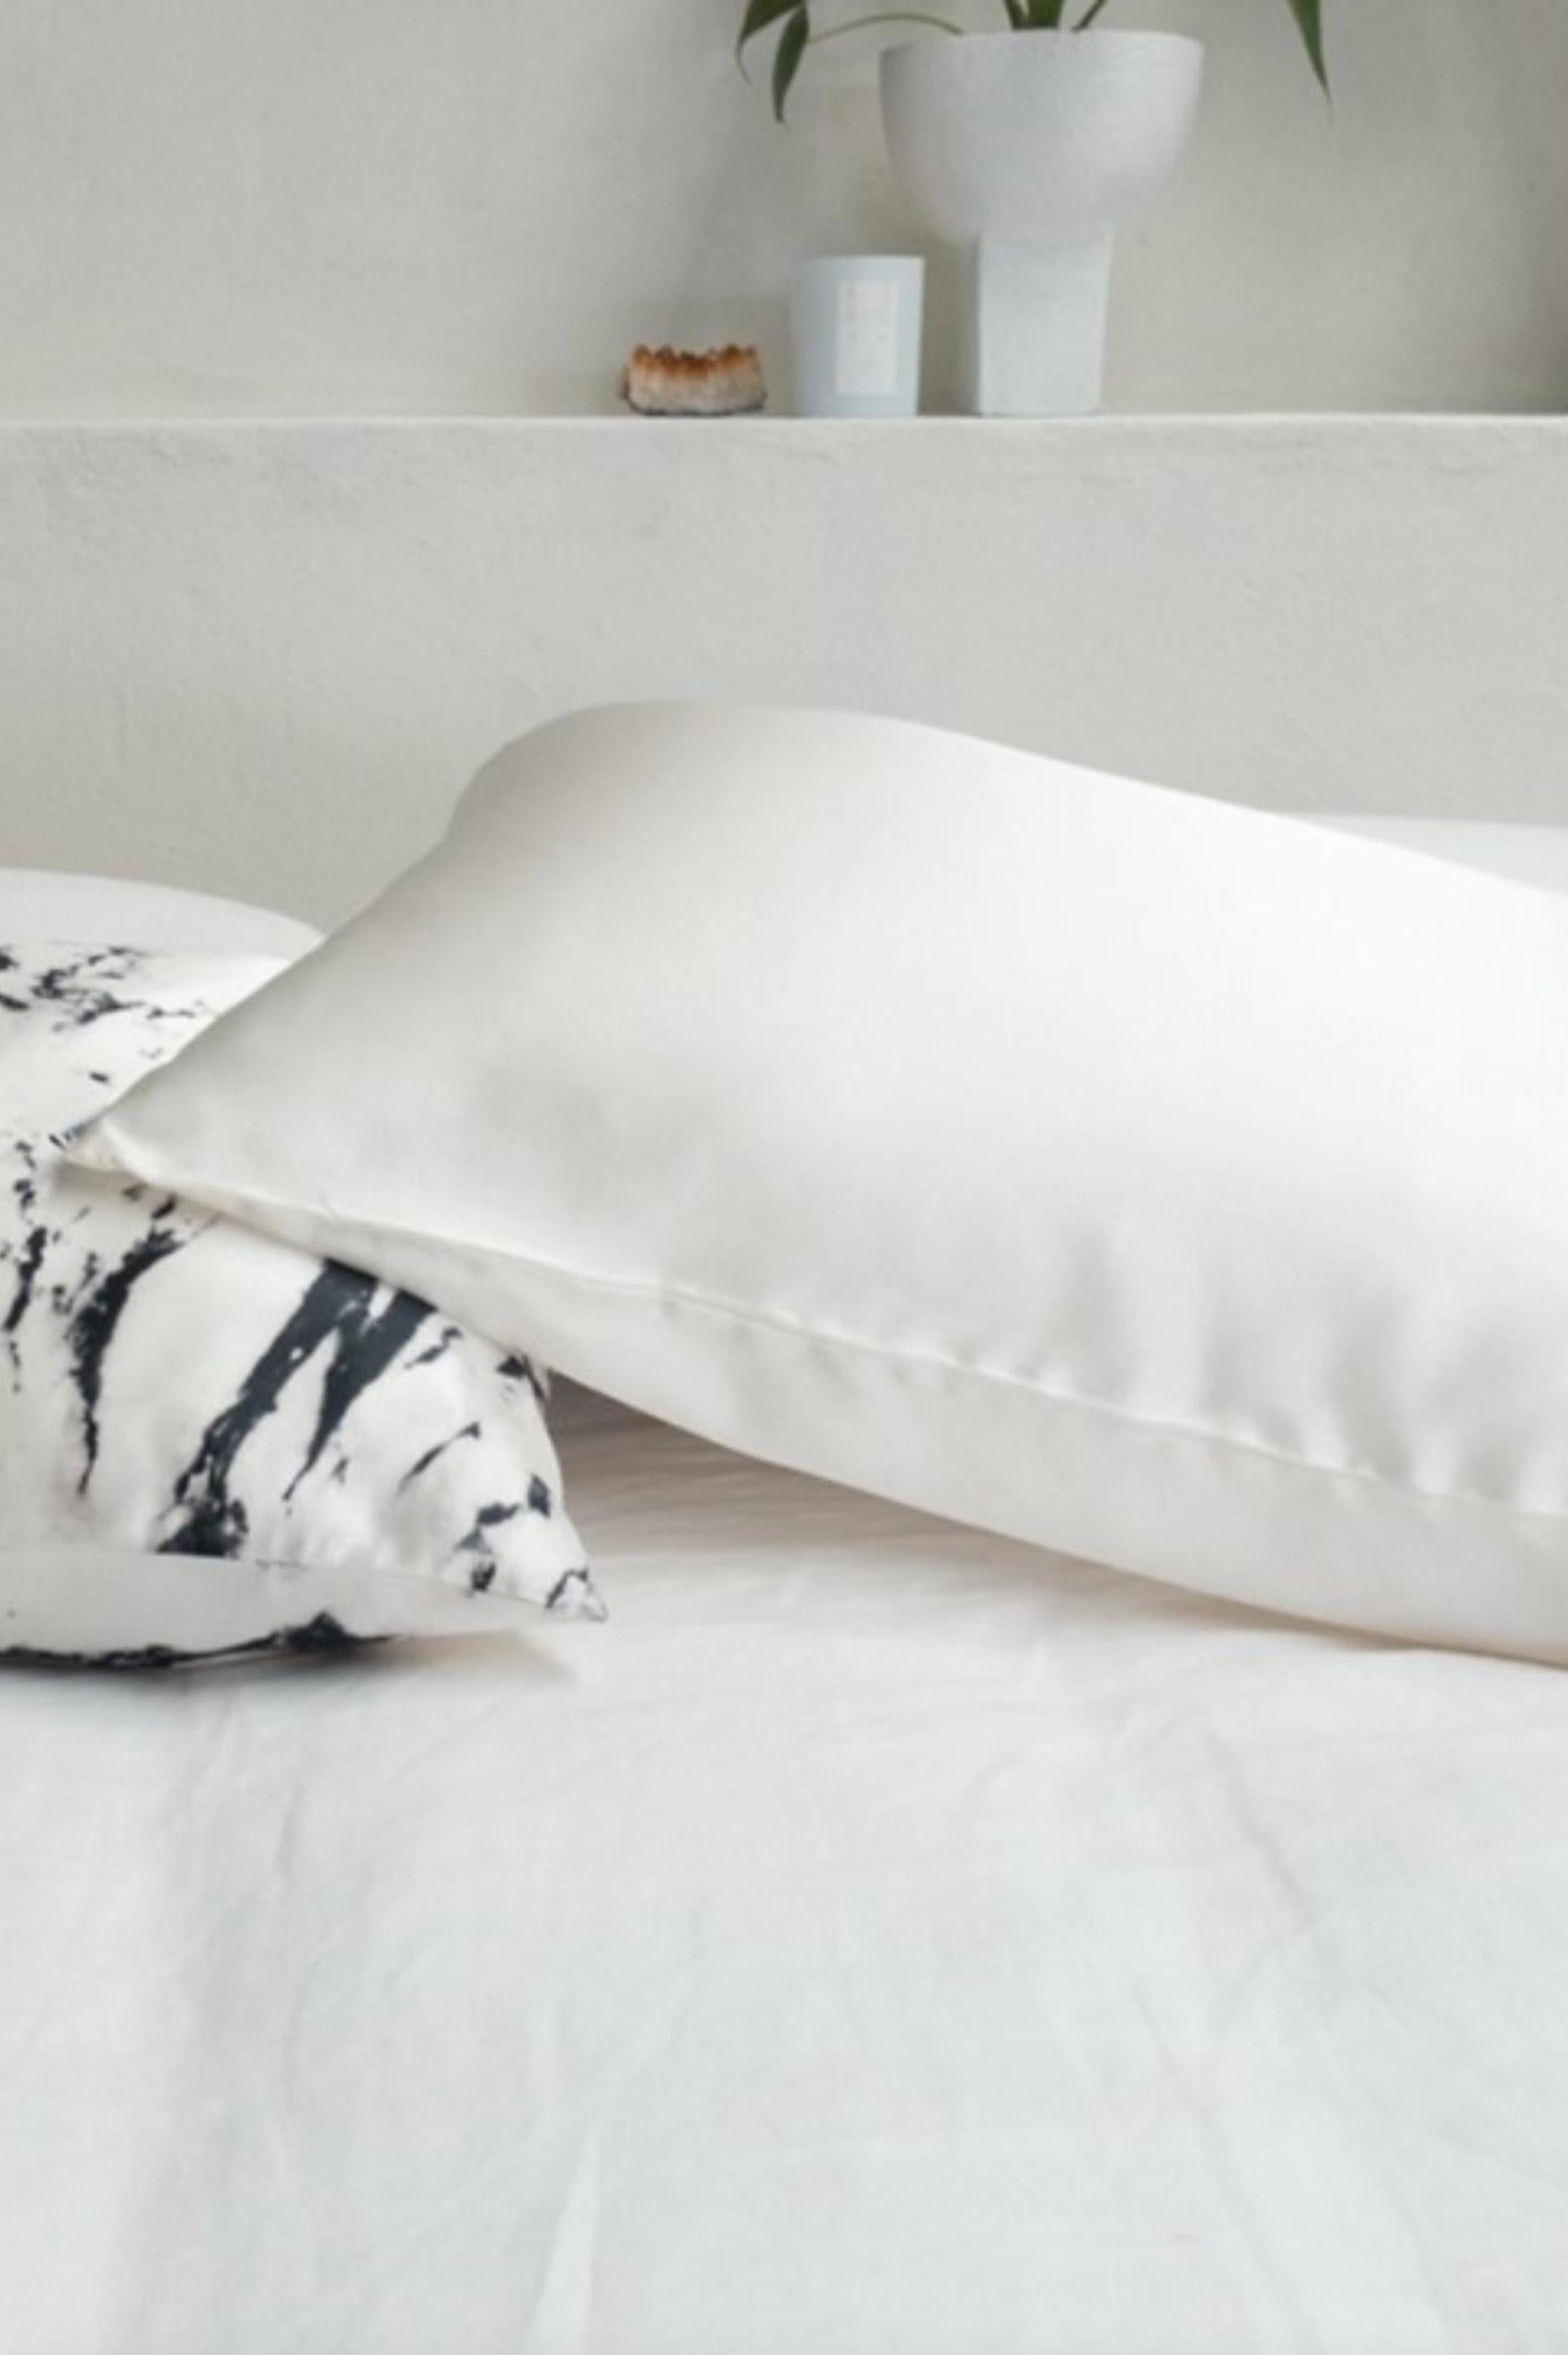 100% Silk Pillowcase Pair in Ivory